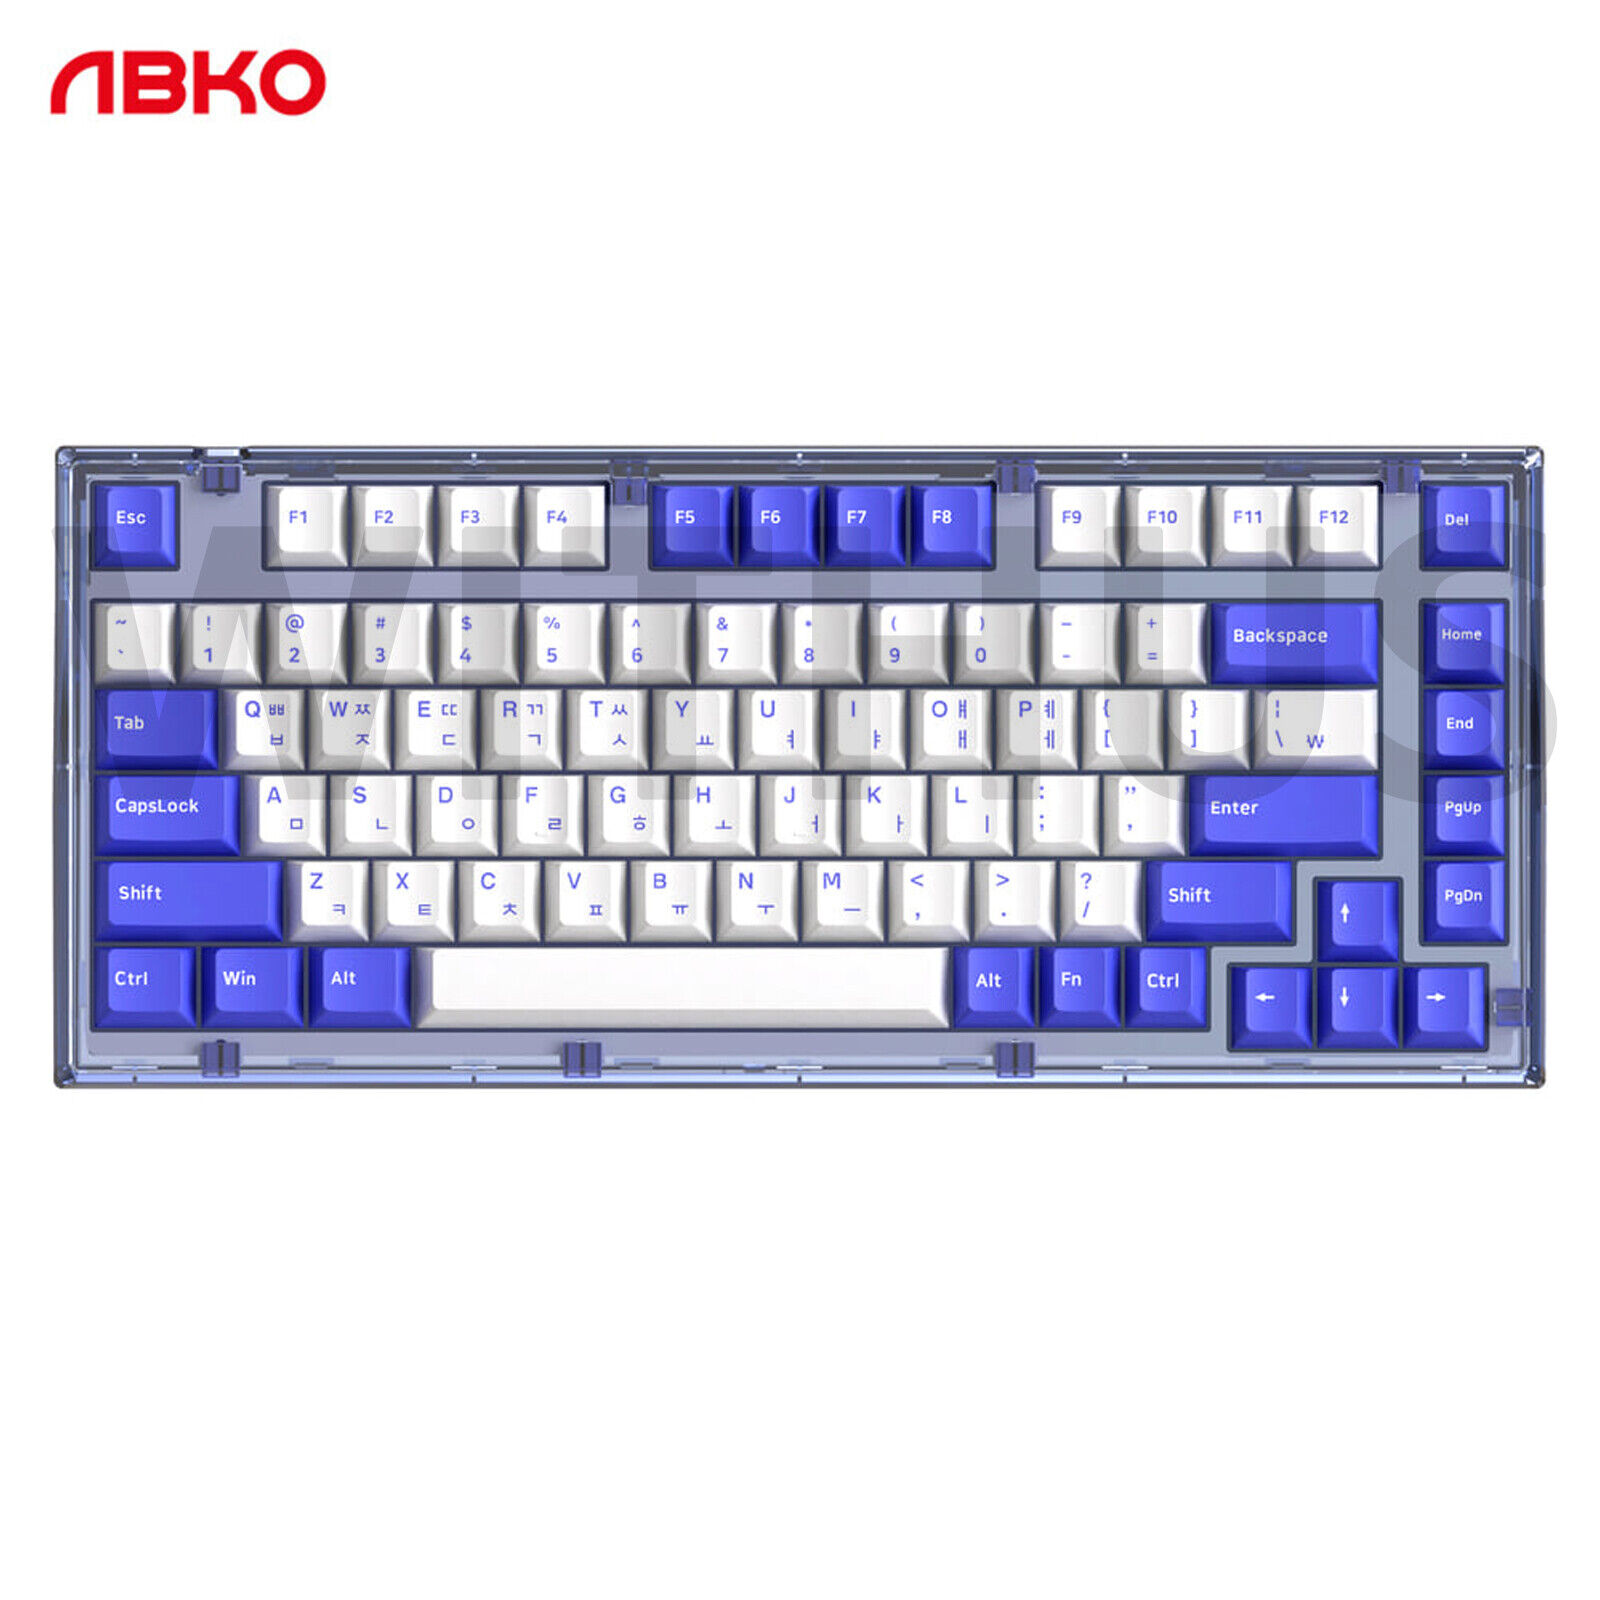 ABKO AG75 Gasket Mount RGB HOTSWAP Mechanical Keyboard English/Korean - 3color